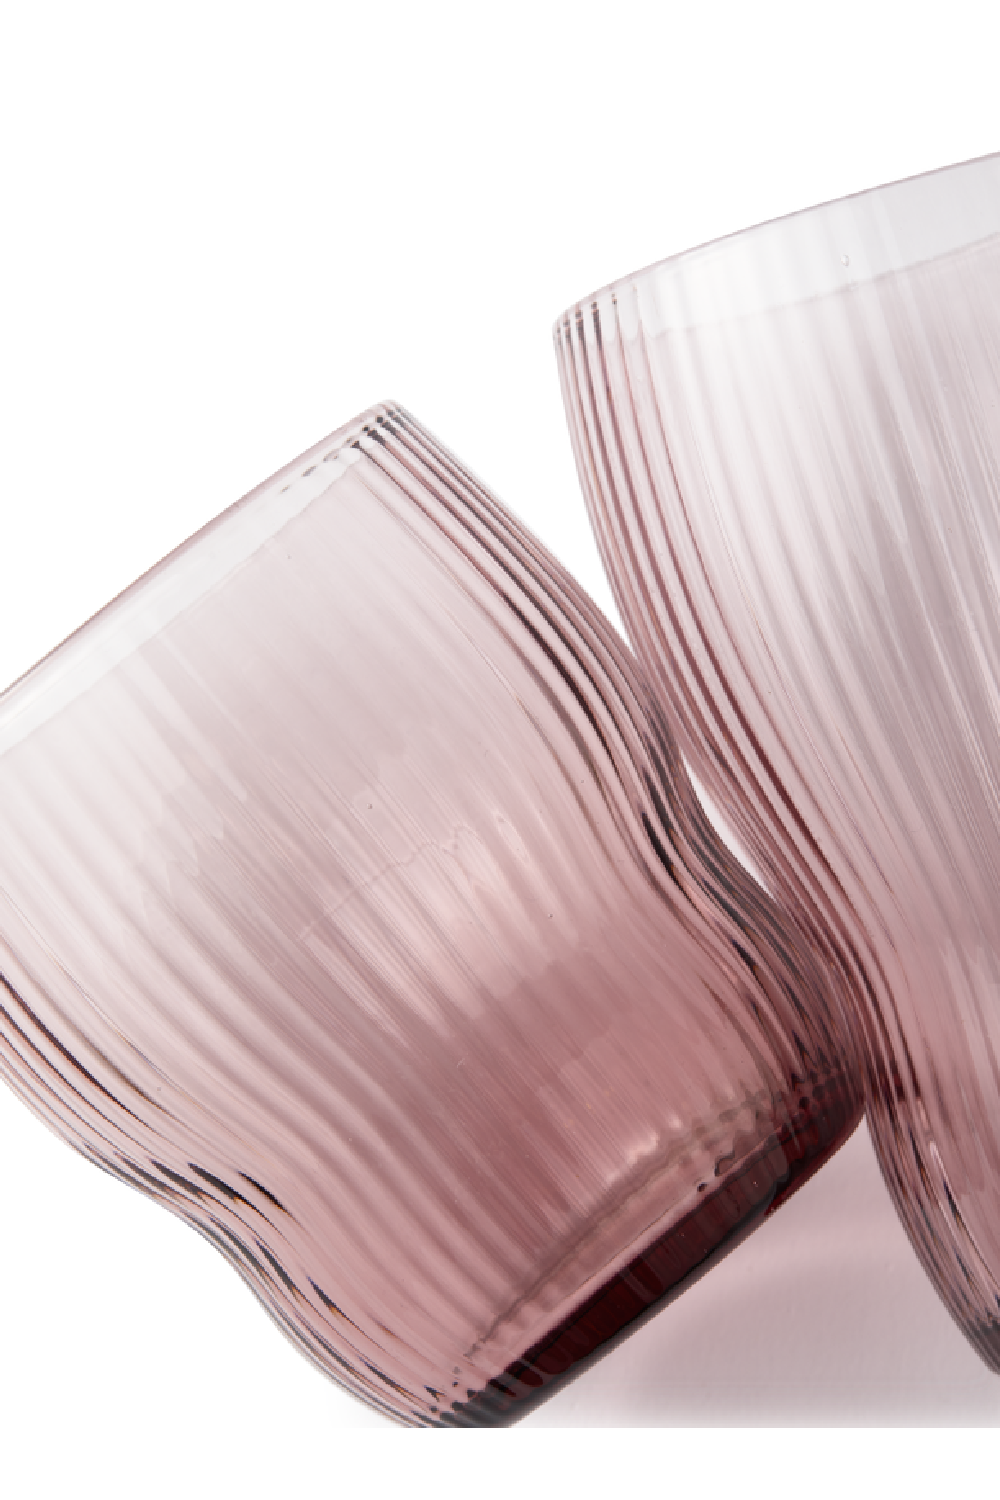 Purple Ridged Glass Longdrinks | Pols Potten Pum | Oroa.com